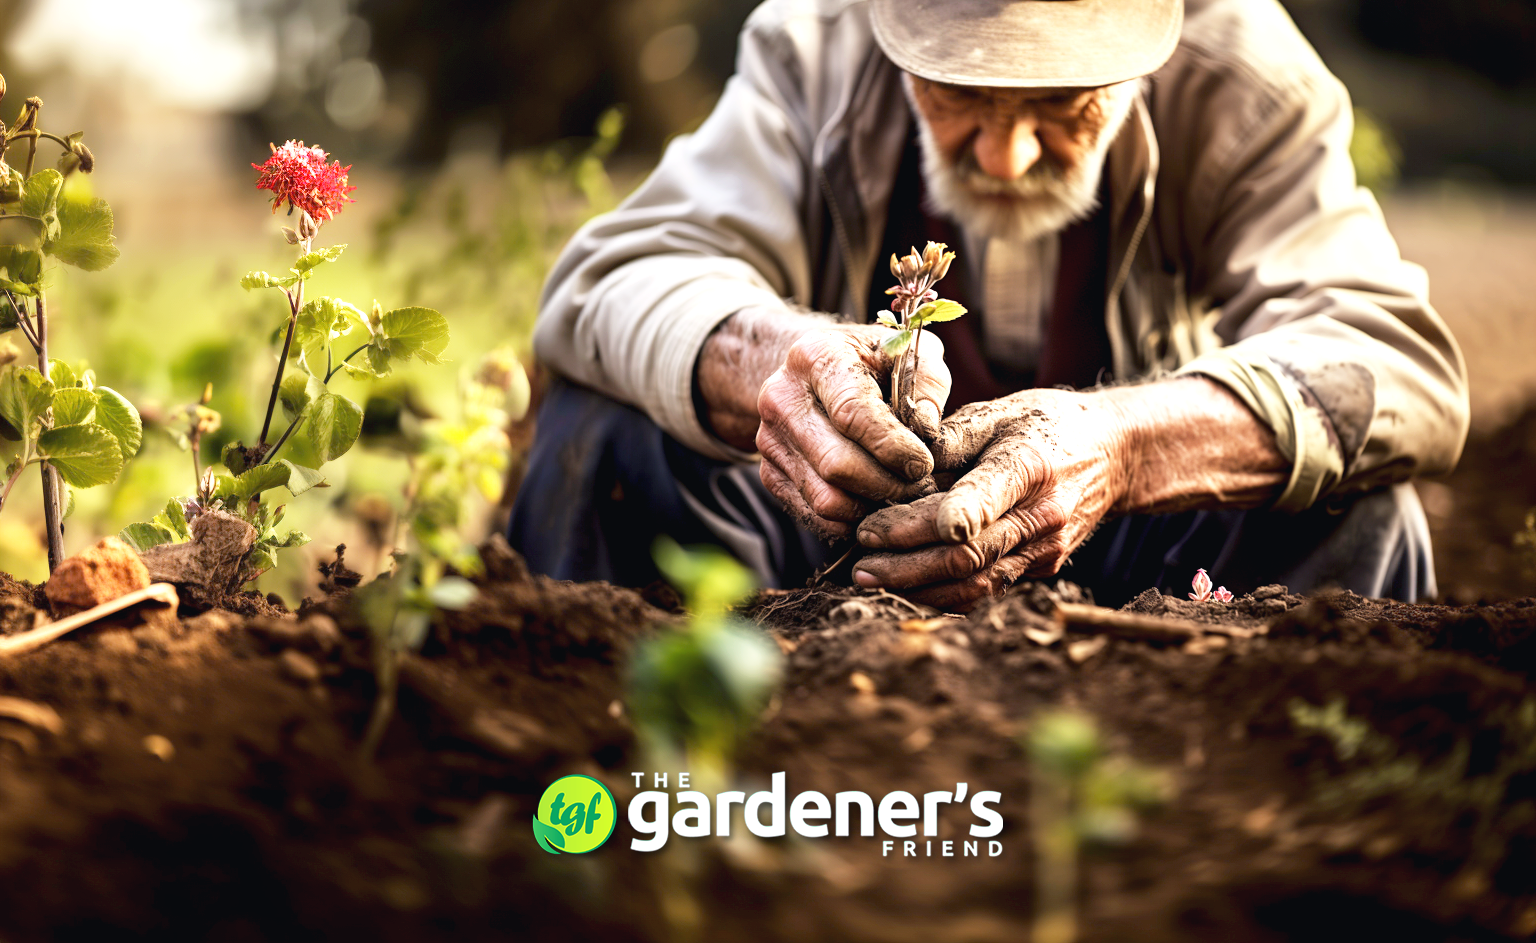 Elderly man actively engaged in gardening.